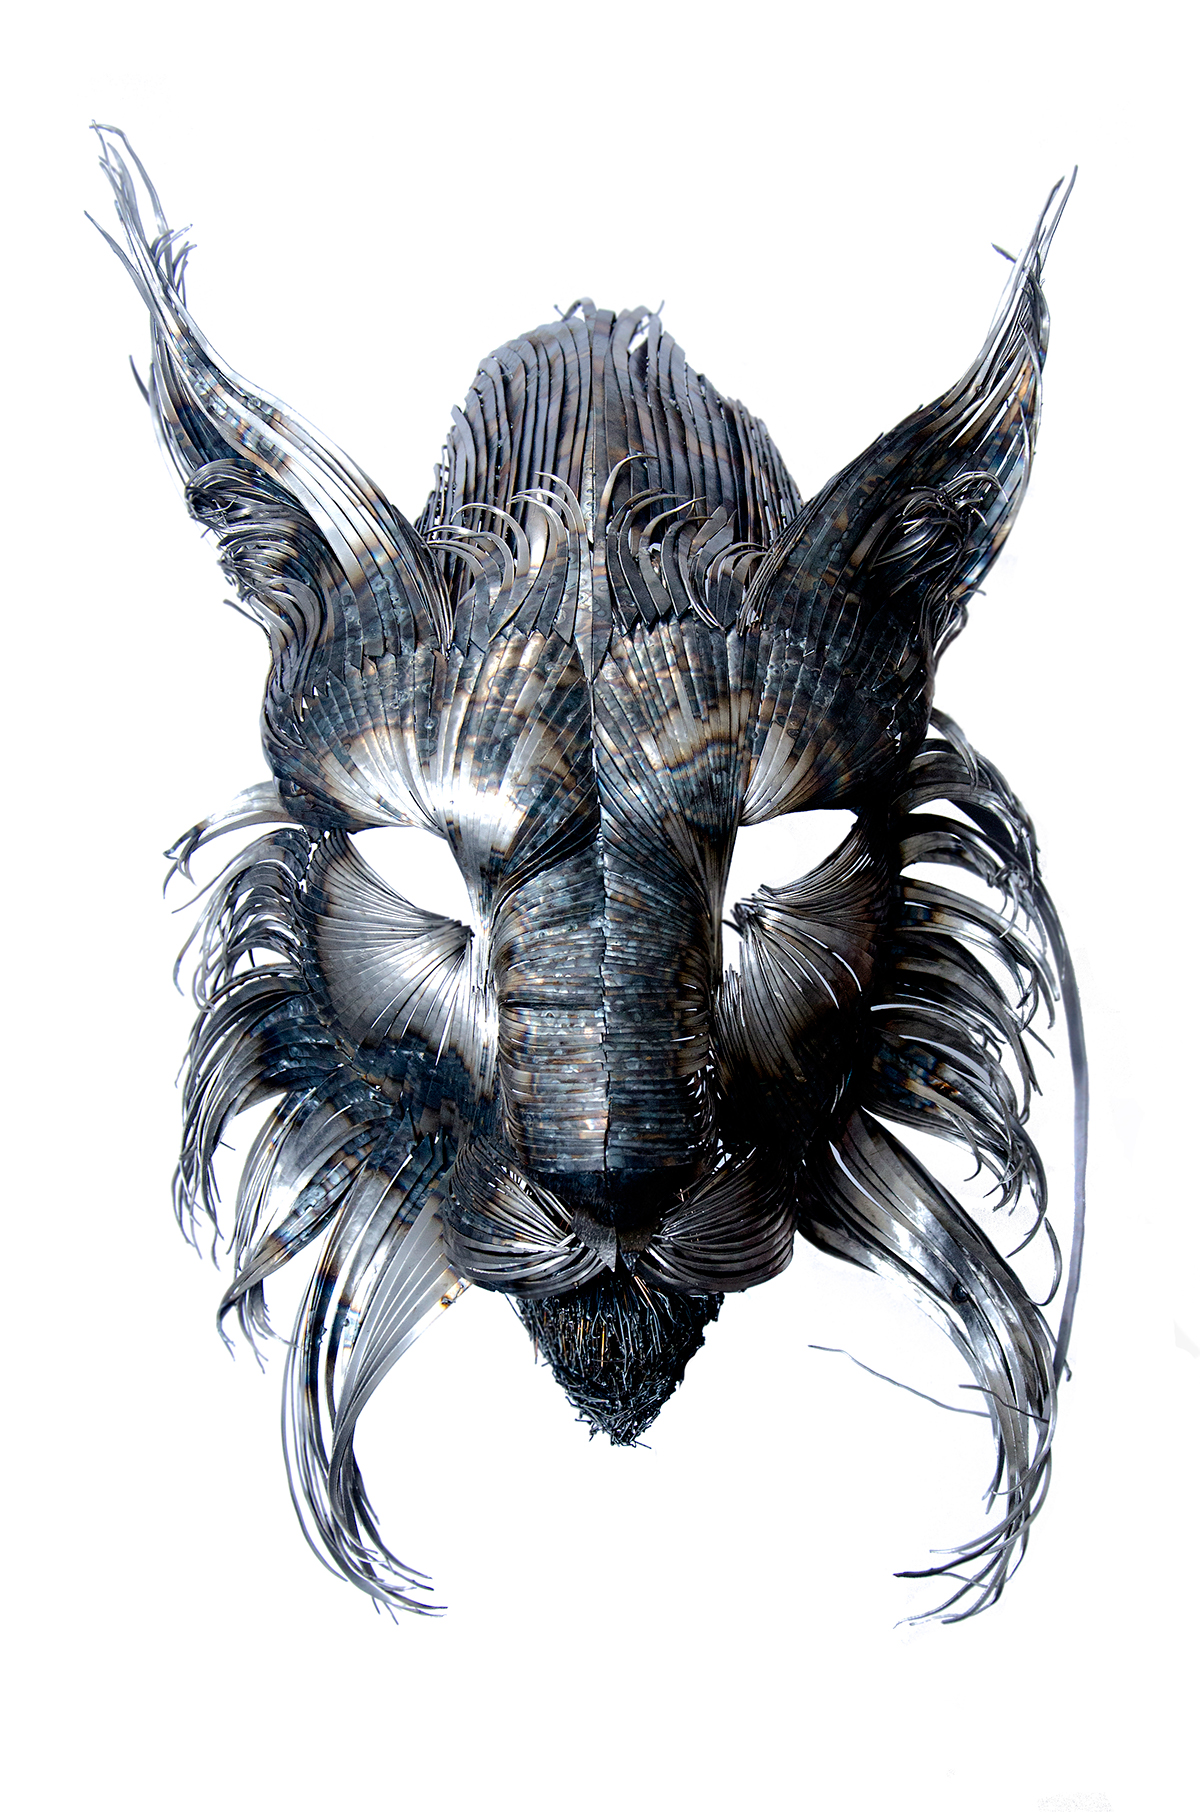 lynx metal sculpture wildlife animal introspection lynxandwoman blackwire face cats metalsculpture